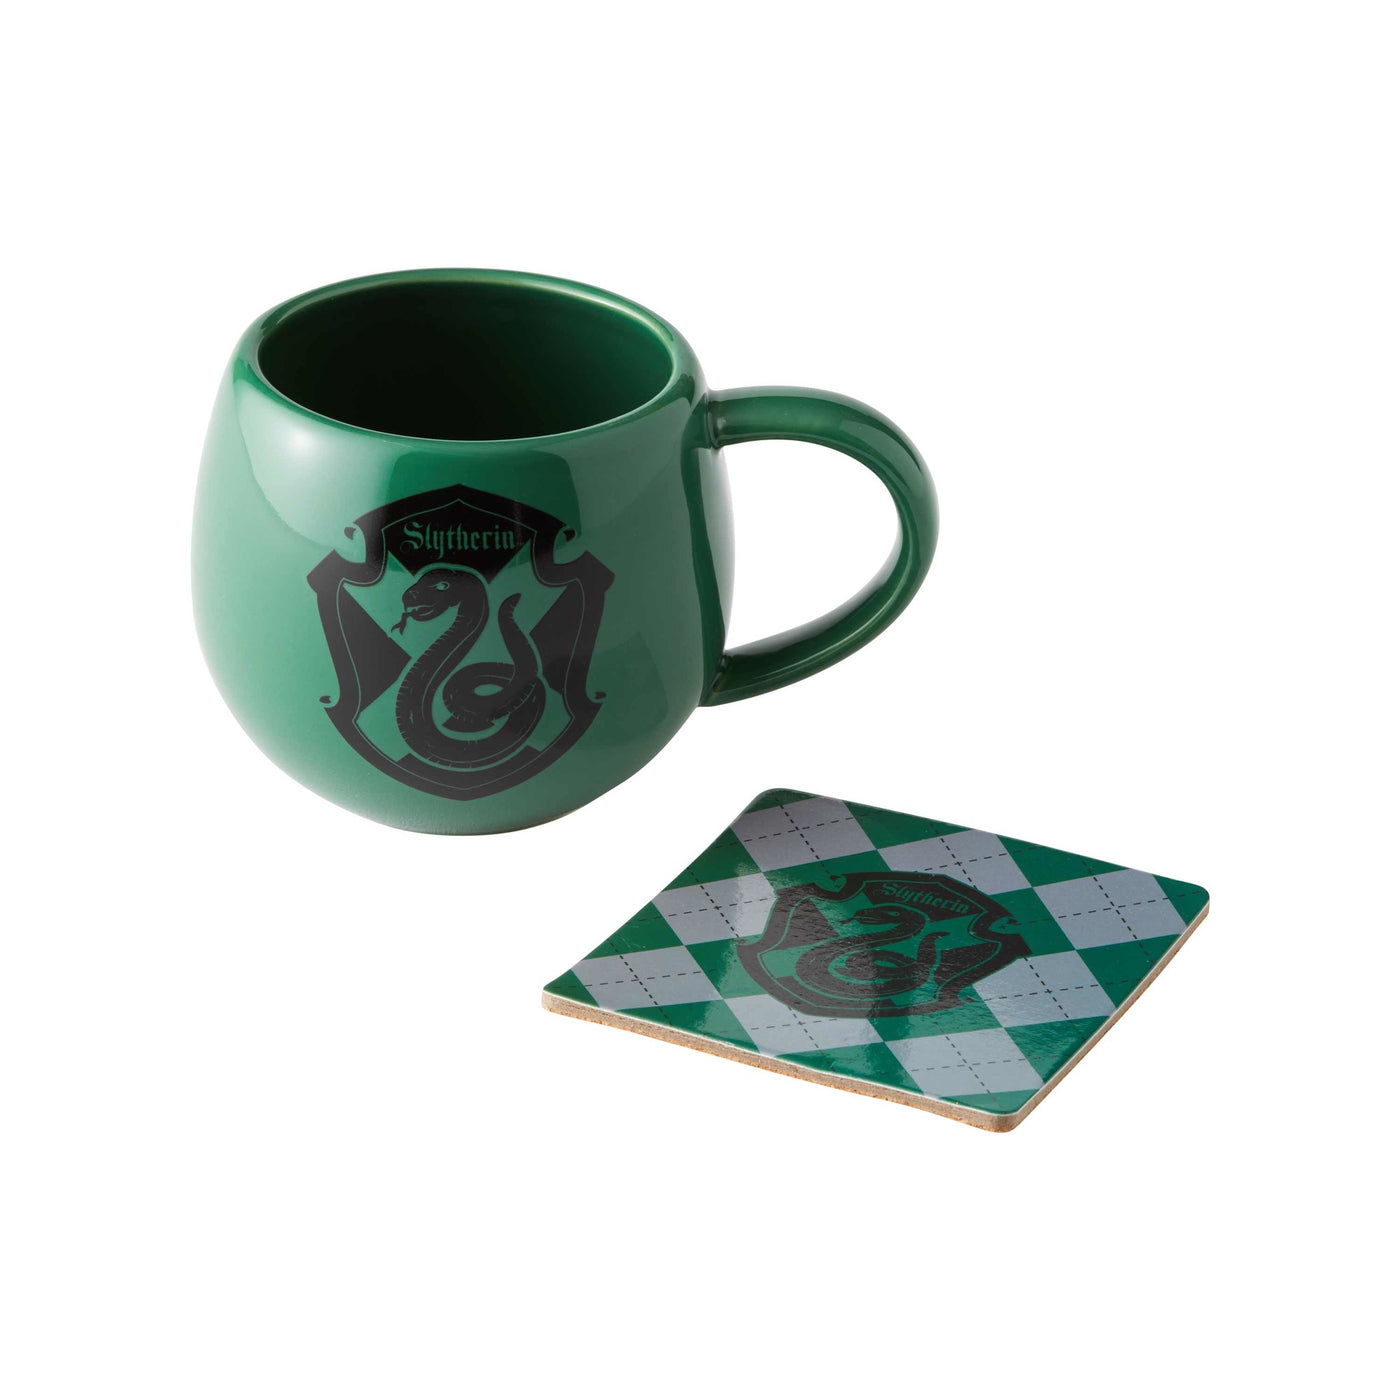 Harry Potter by Onimd Slytherin Crest Mug Coaster Set New with Box